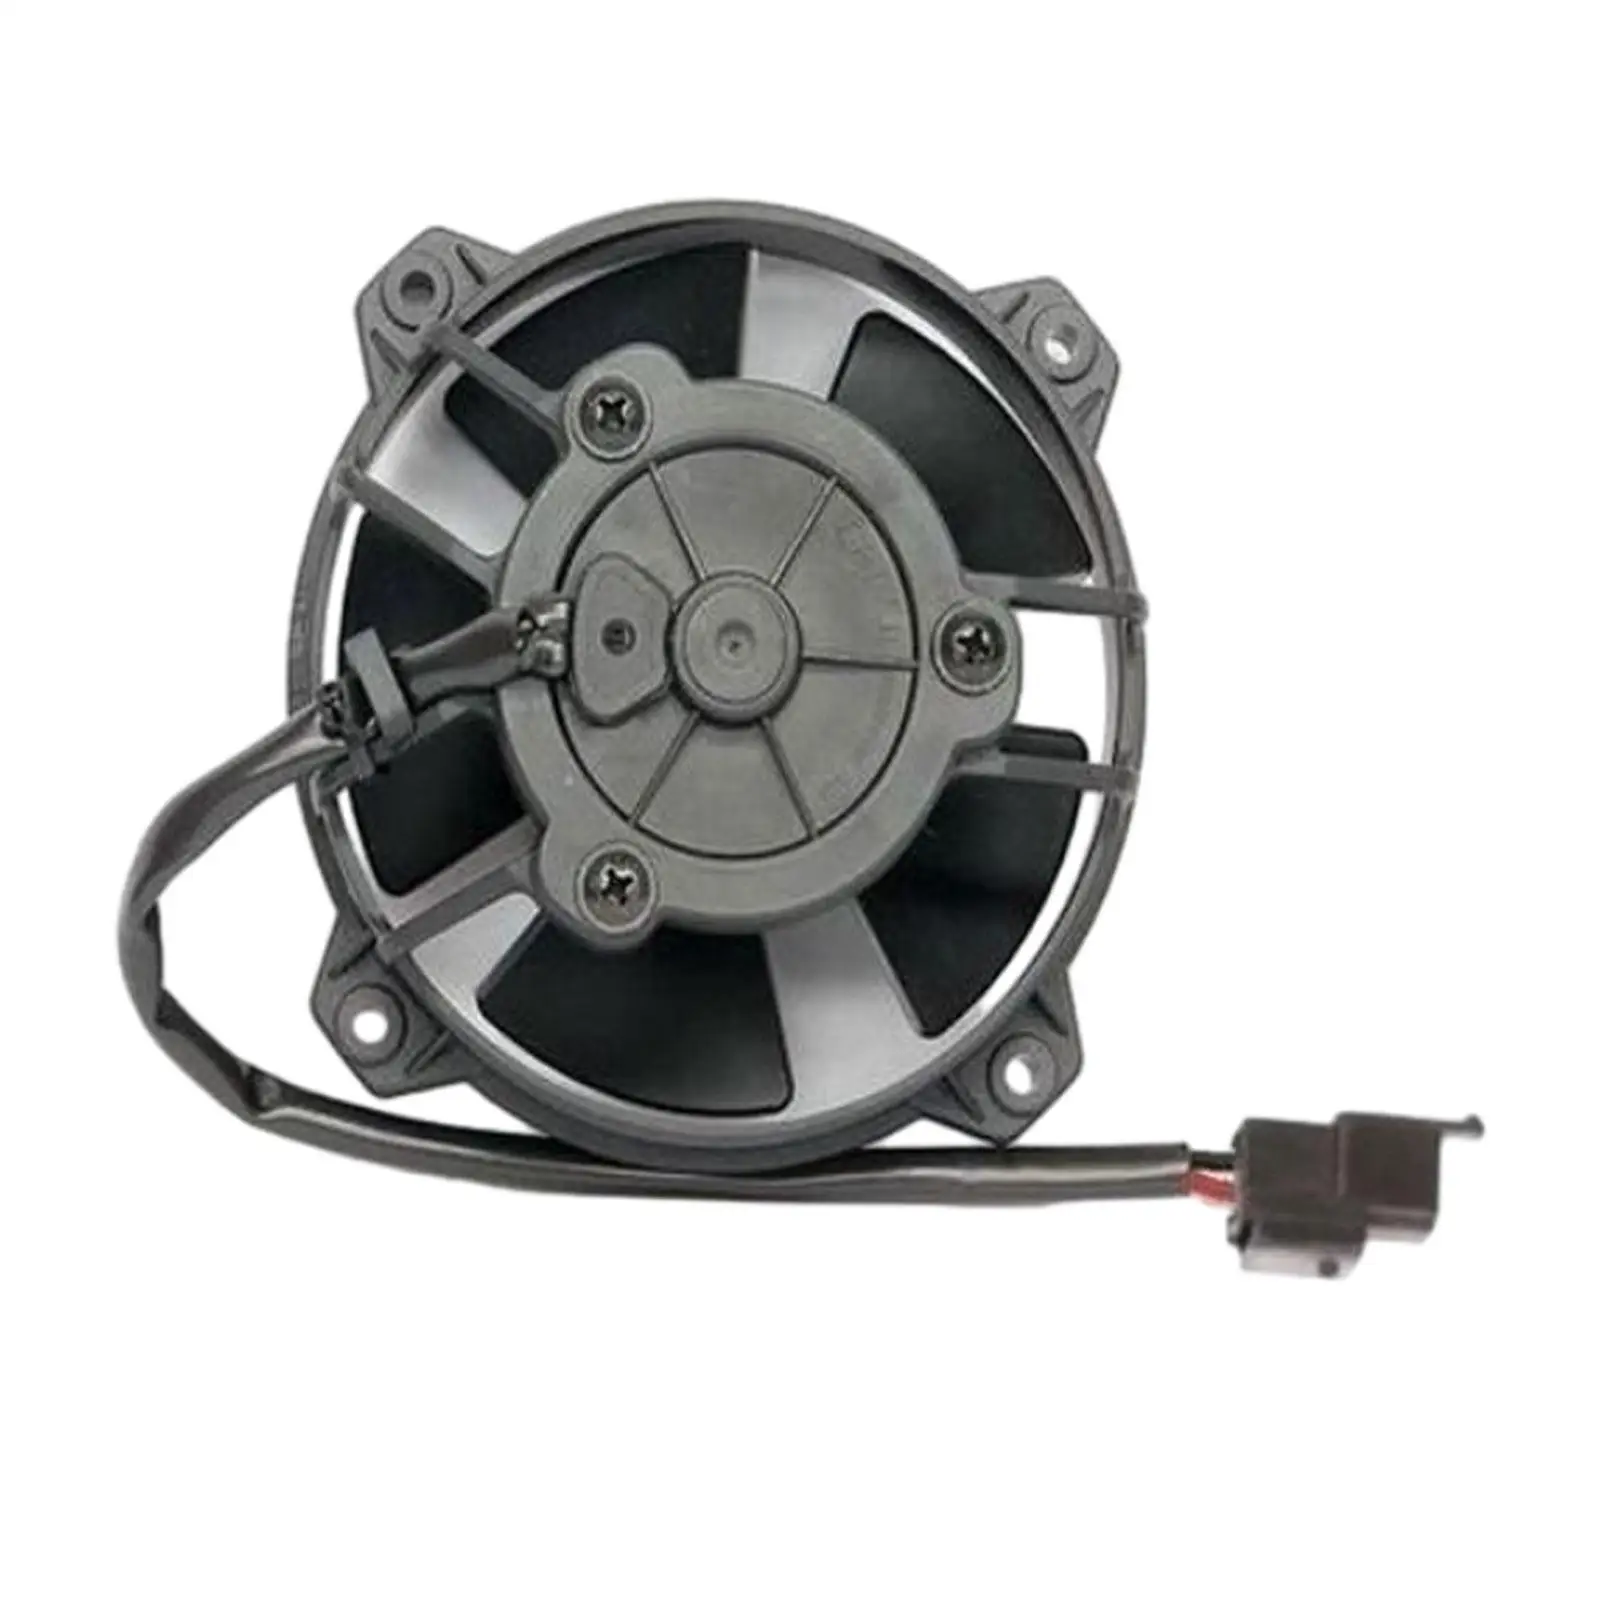 Puller Low Profile Fan 4 inch Fan Pull for VA32-a101-62A Easily Install